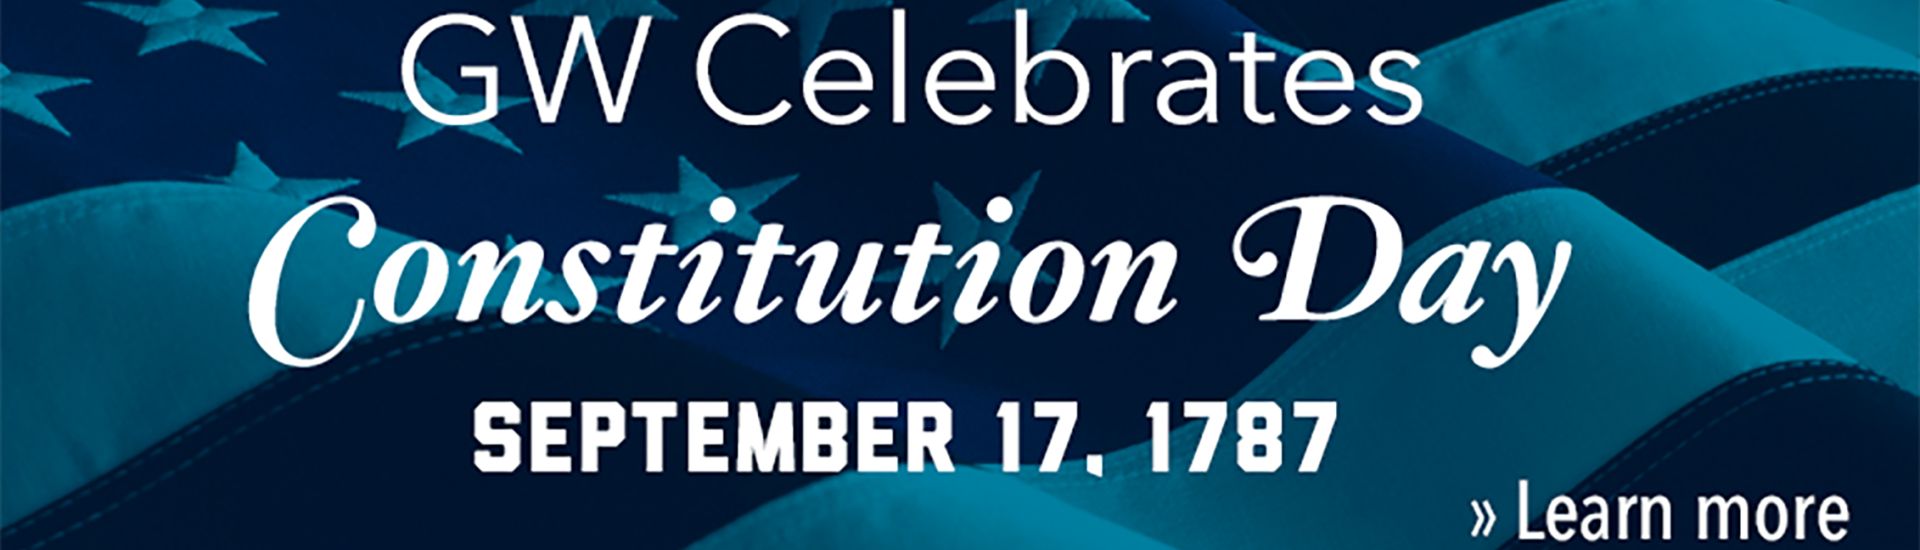 GW Celebrates Constitution Day September 17, 1787